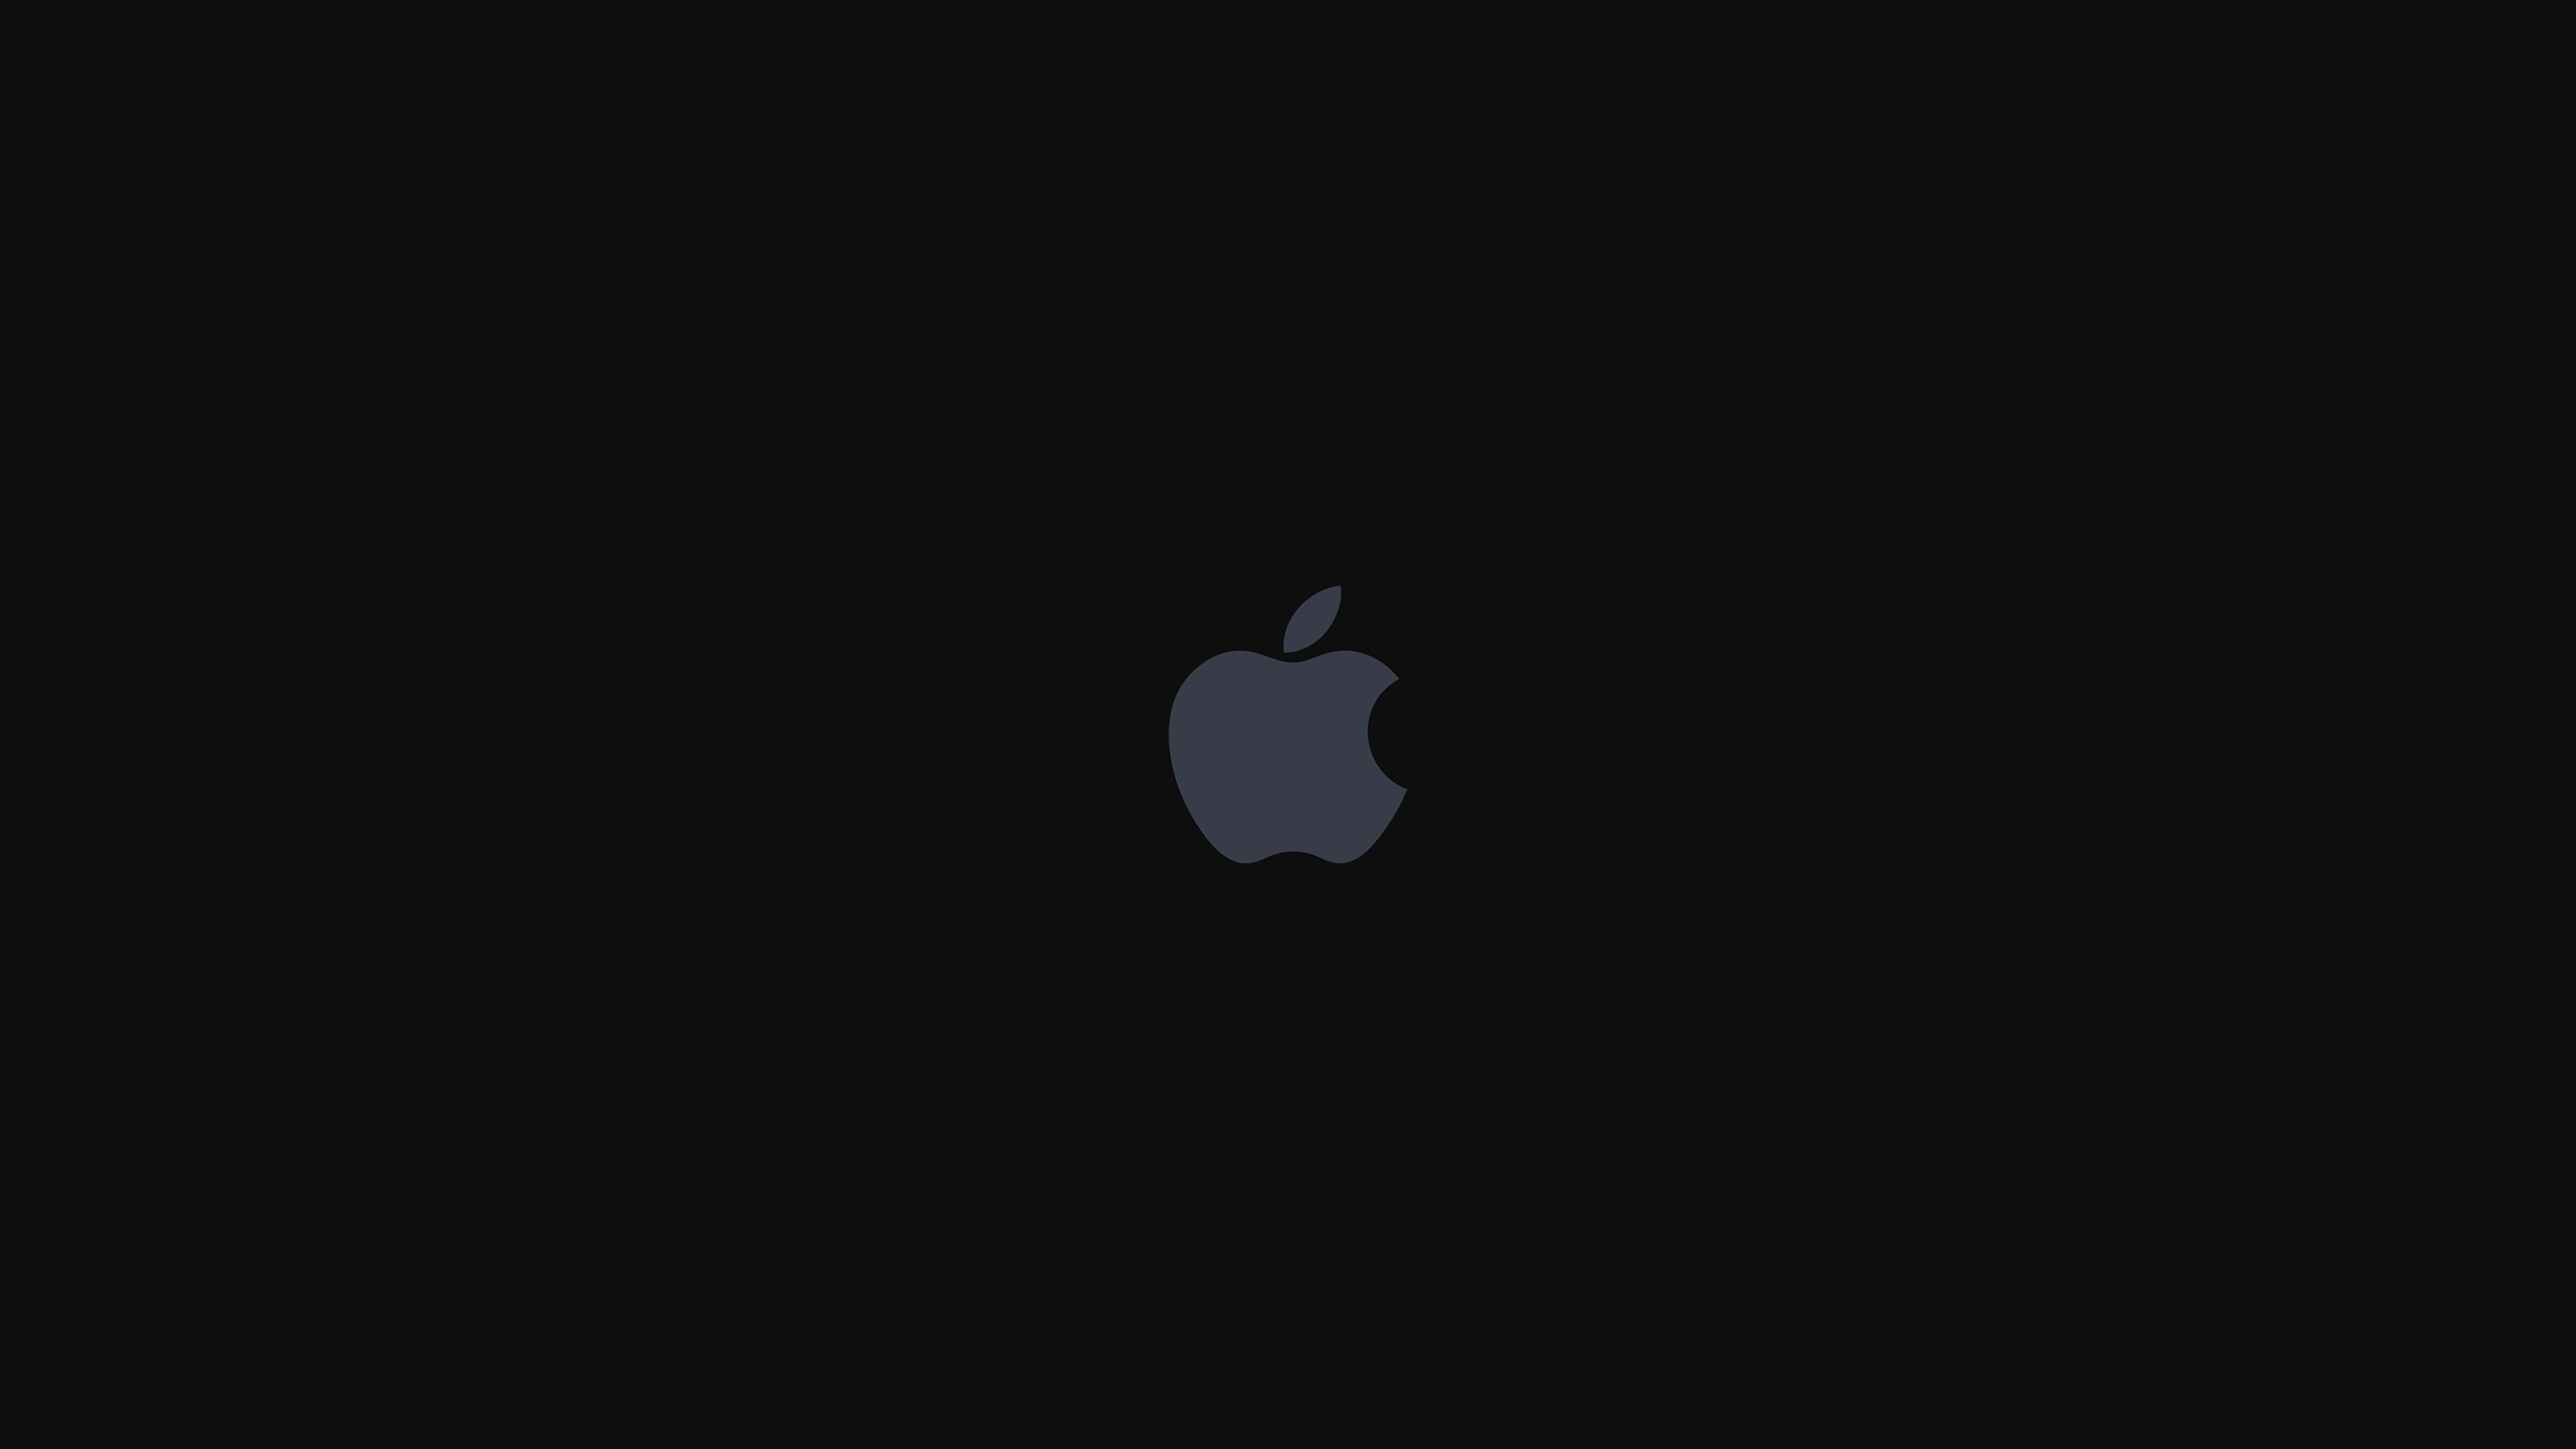 Apple logo desktop wallpapers